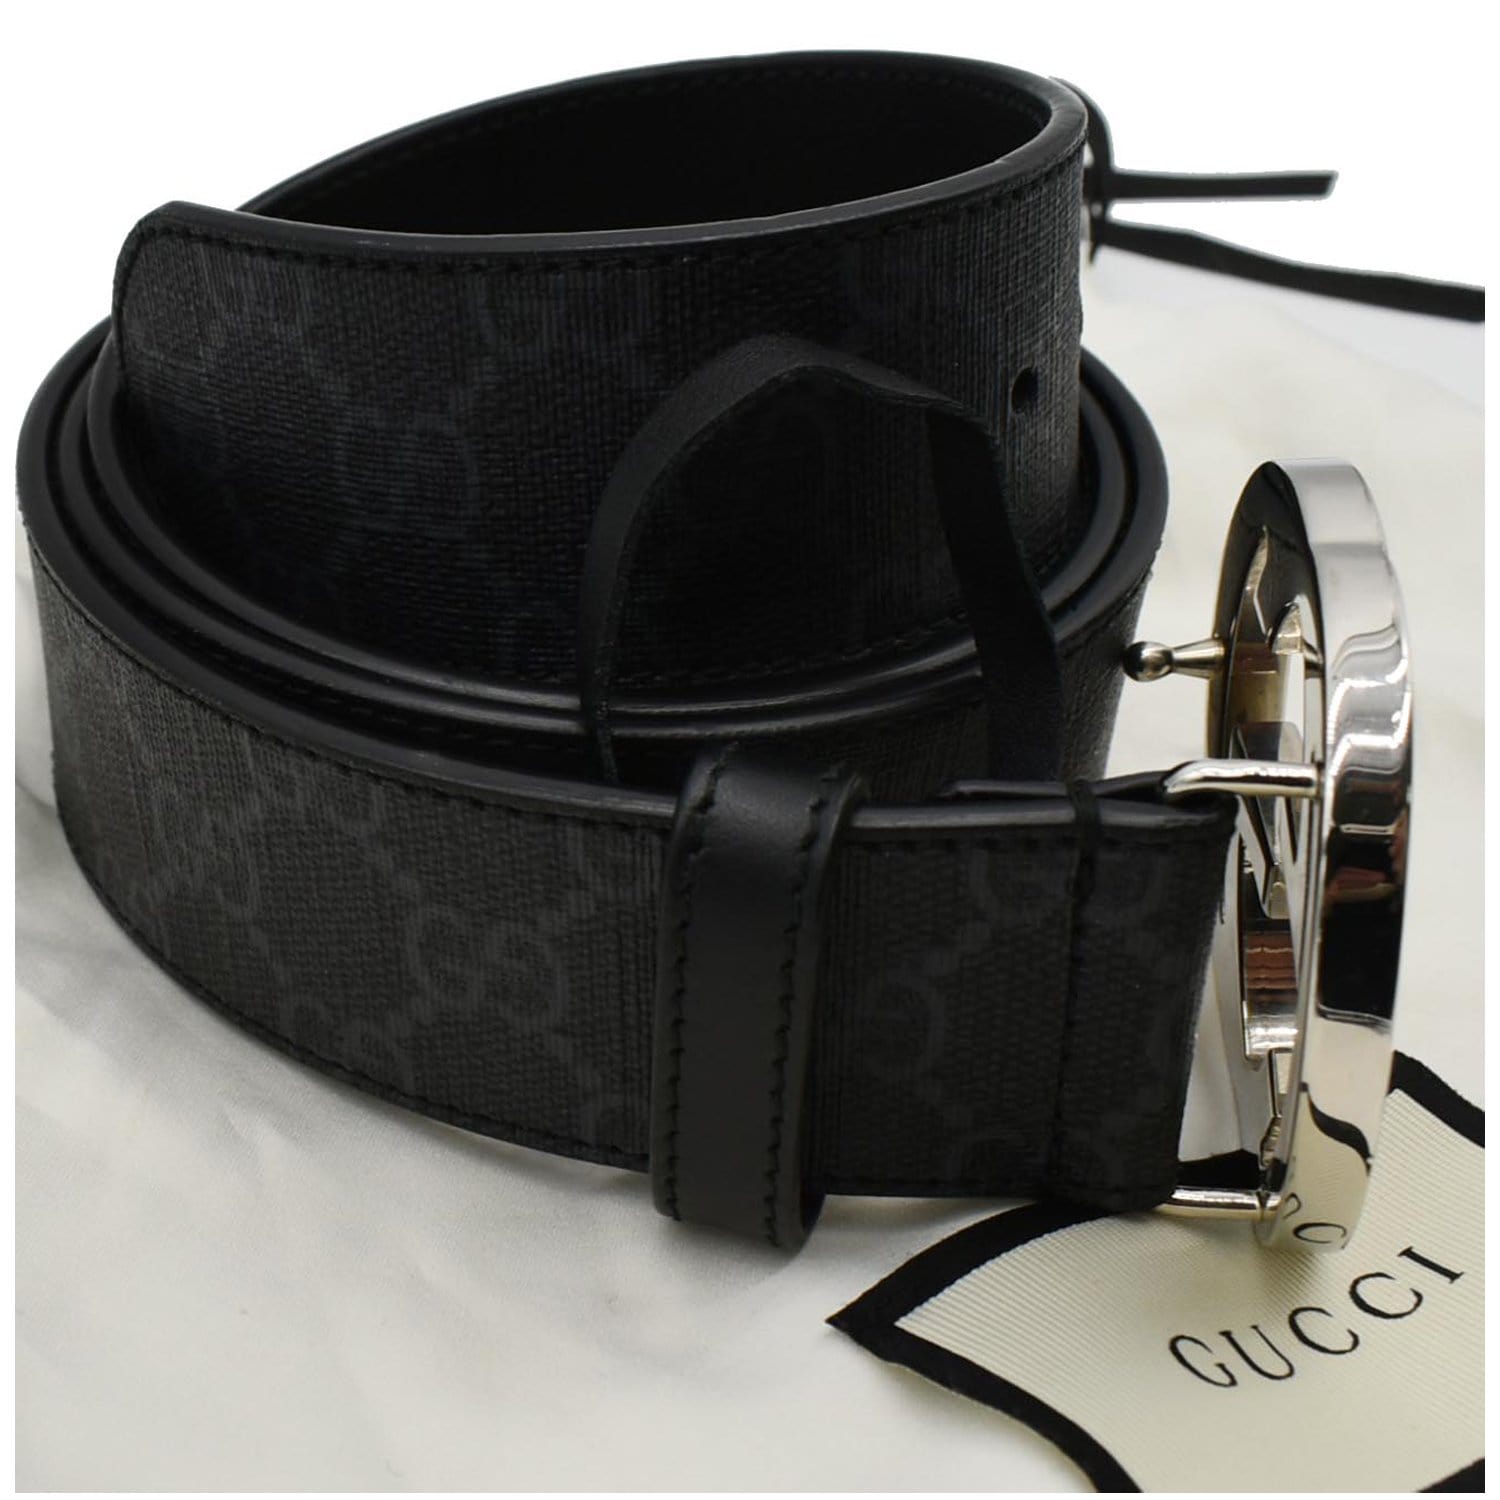 Gucci Men's Leather Belt with Interlocking G Buckle